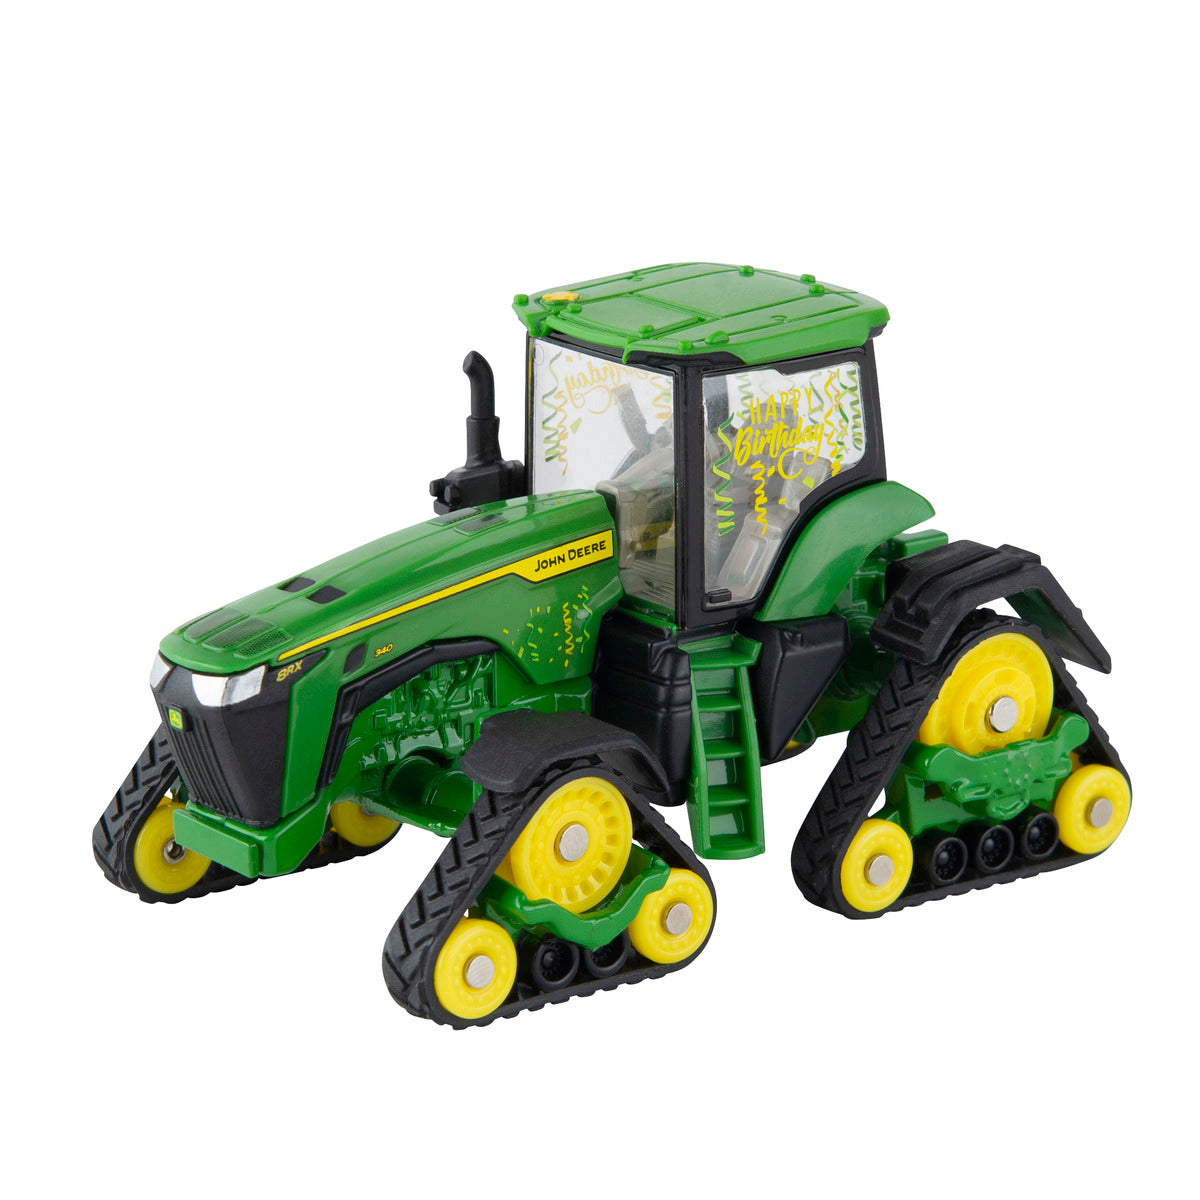 1/64 John Deere 8RX 340 "Happy Birthday" Tractor Toy - LP82768